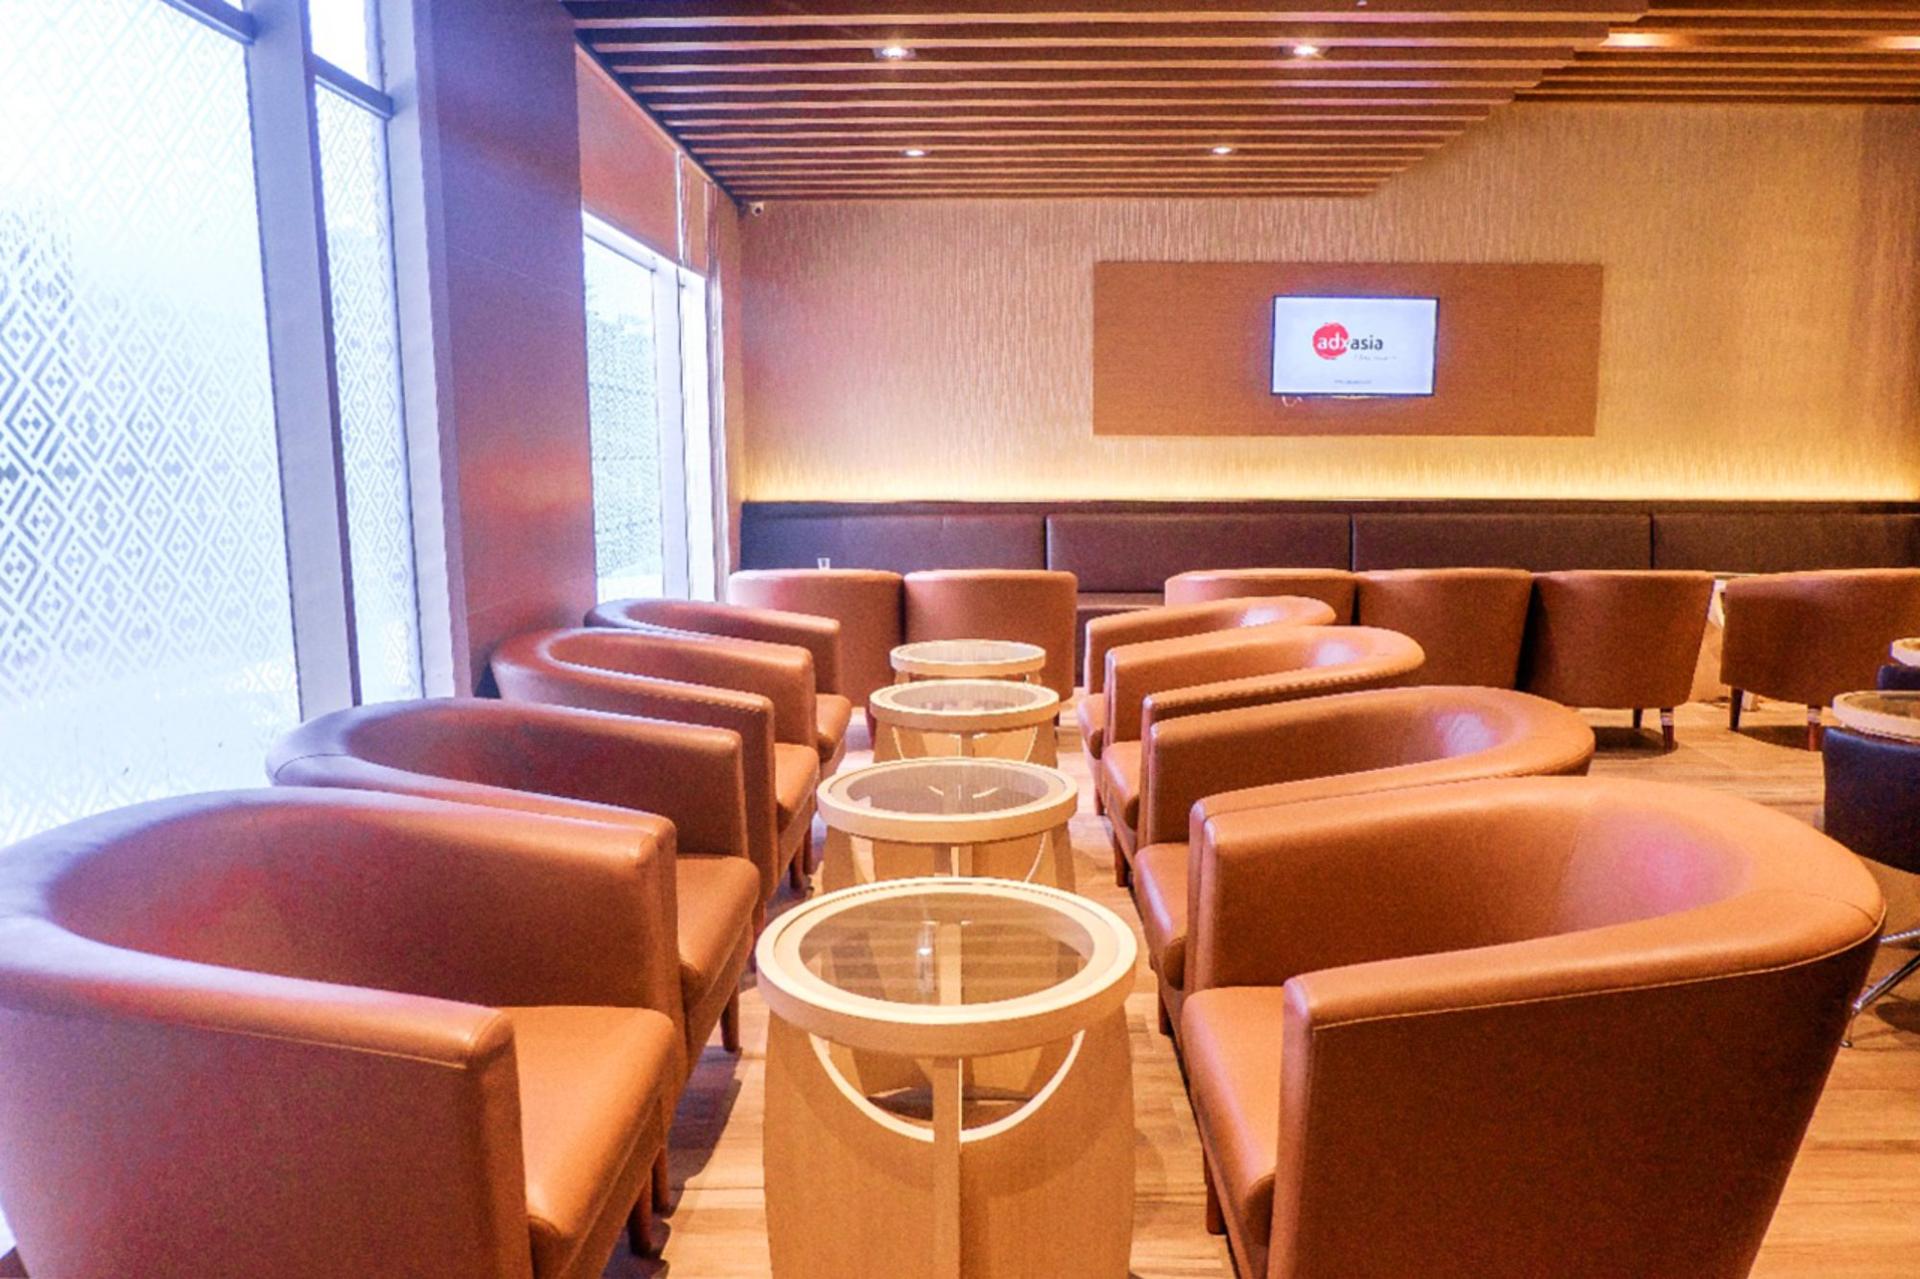 Concordia Premier Lounge image 13 of 18